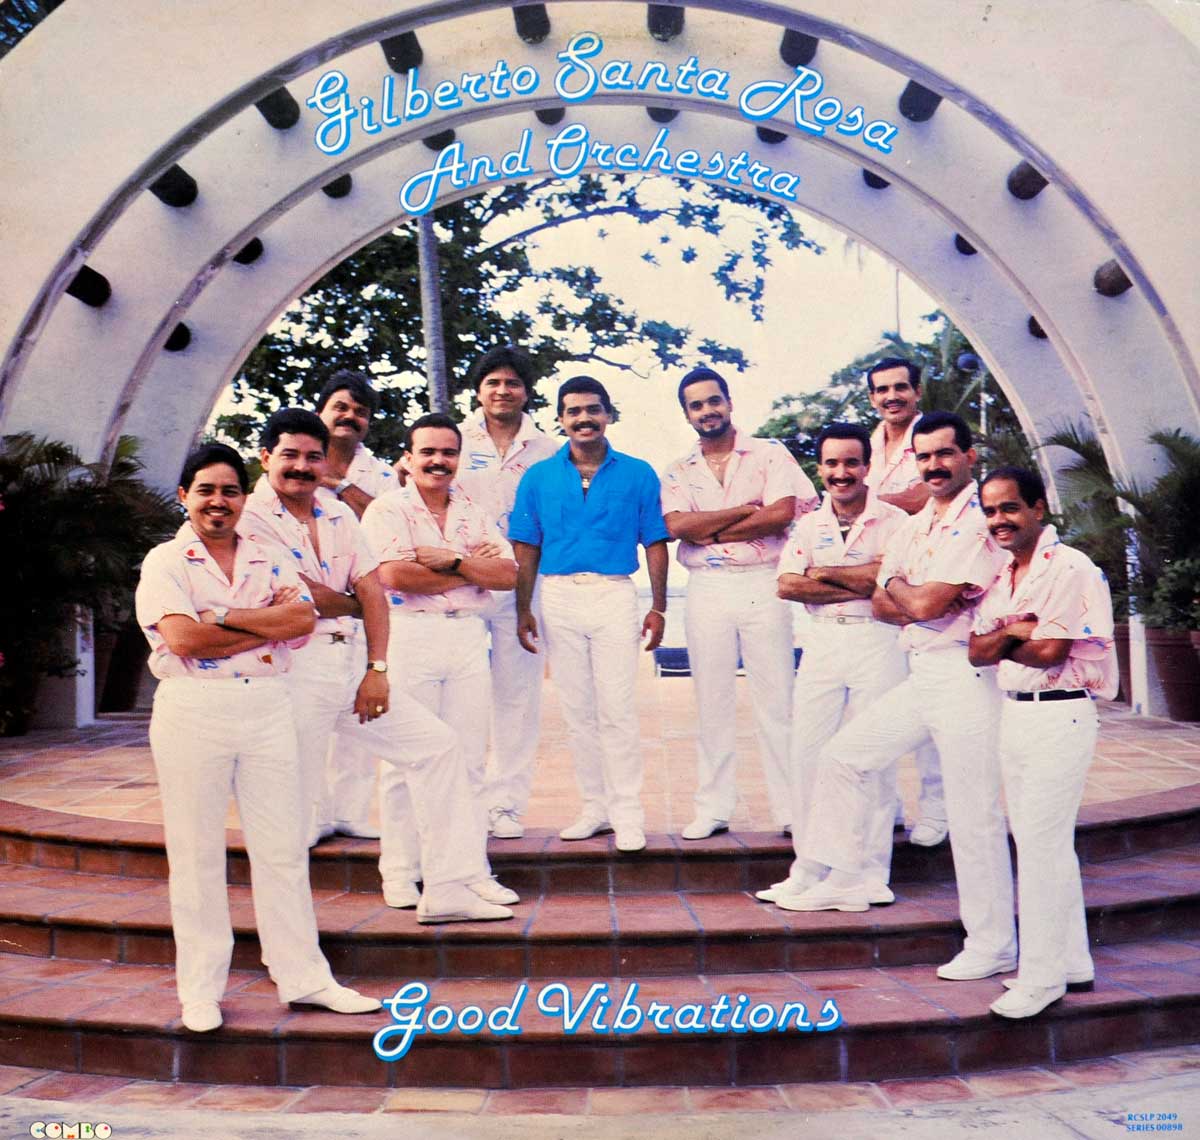 Front Cover Photo of "GILBERTO SANTA ROSA - Good Vibrations" Album 